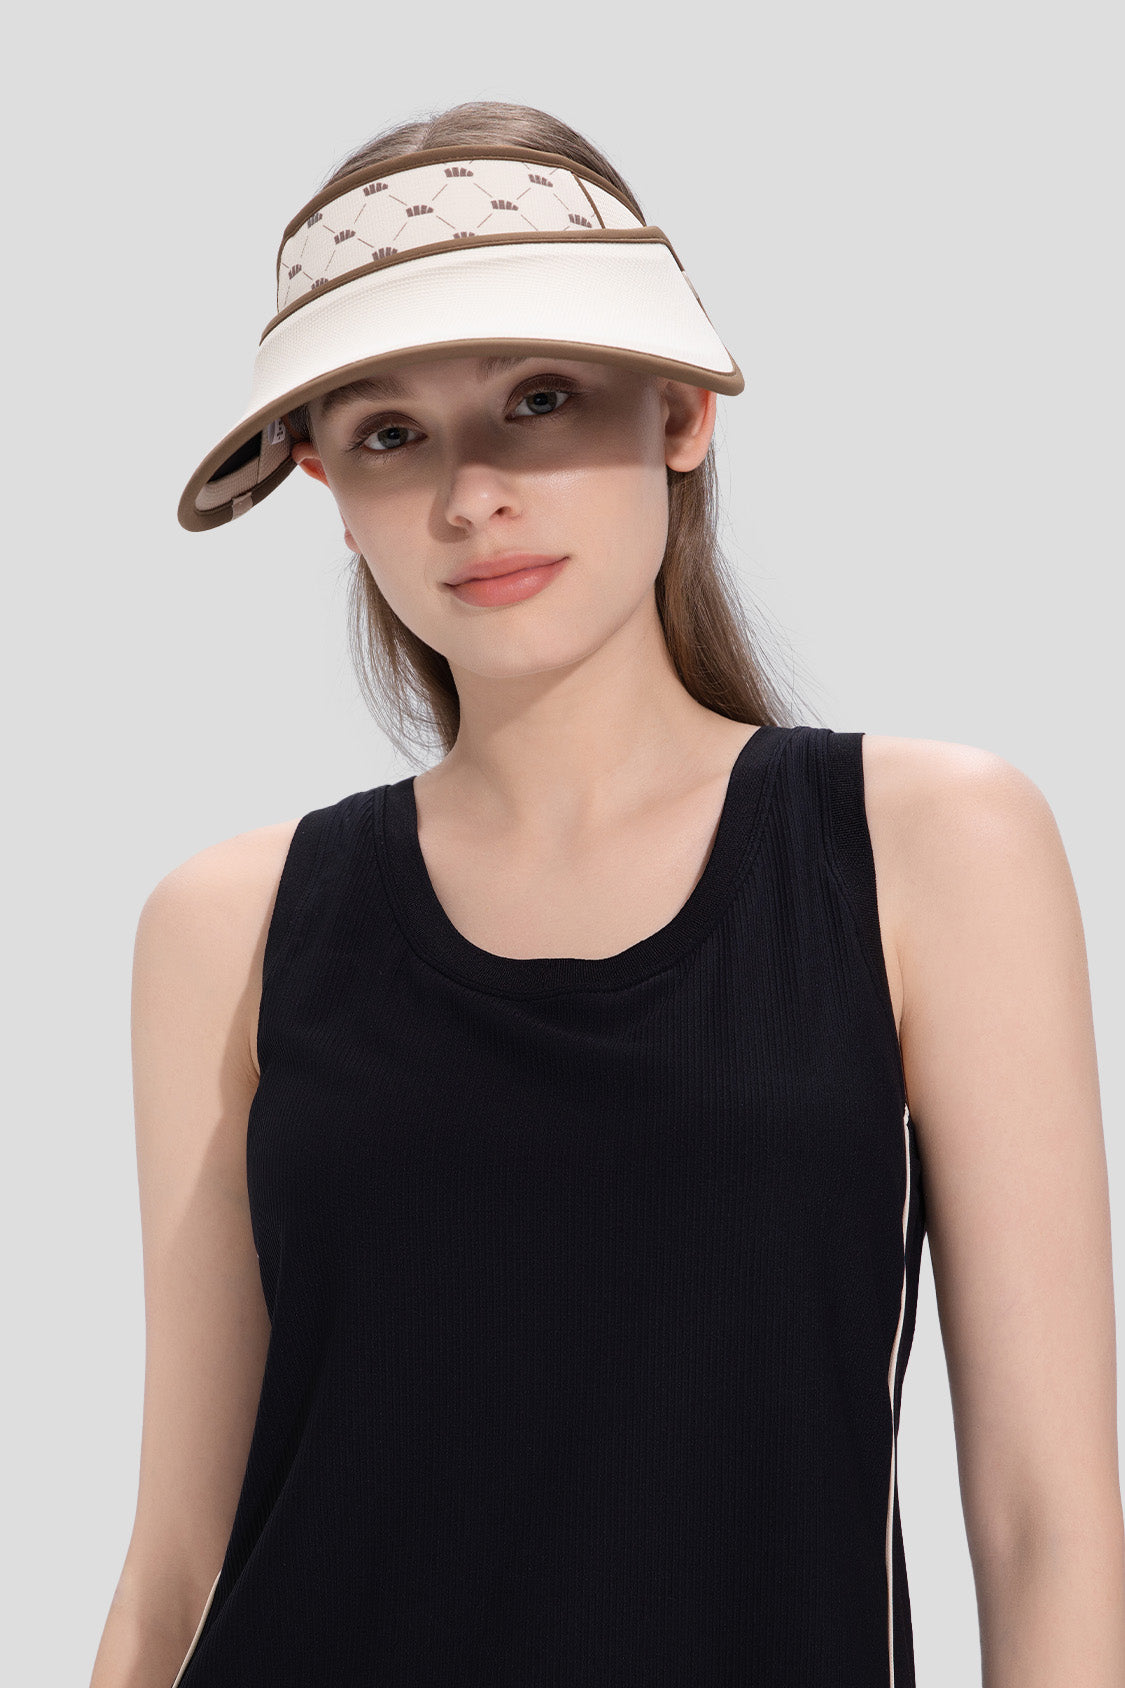 beneunder women's sun hats #color_drift sand gray